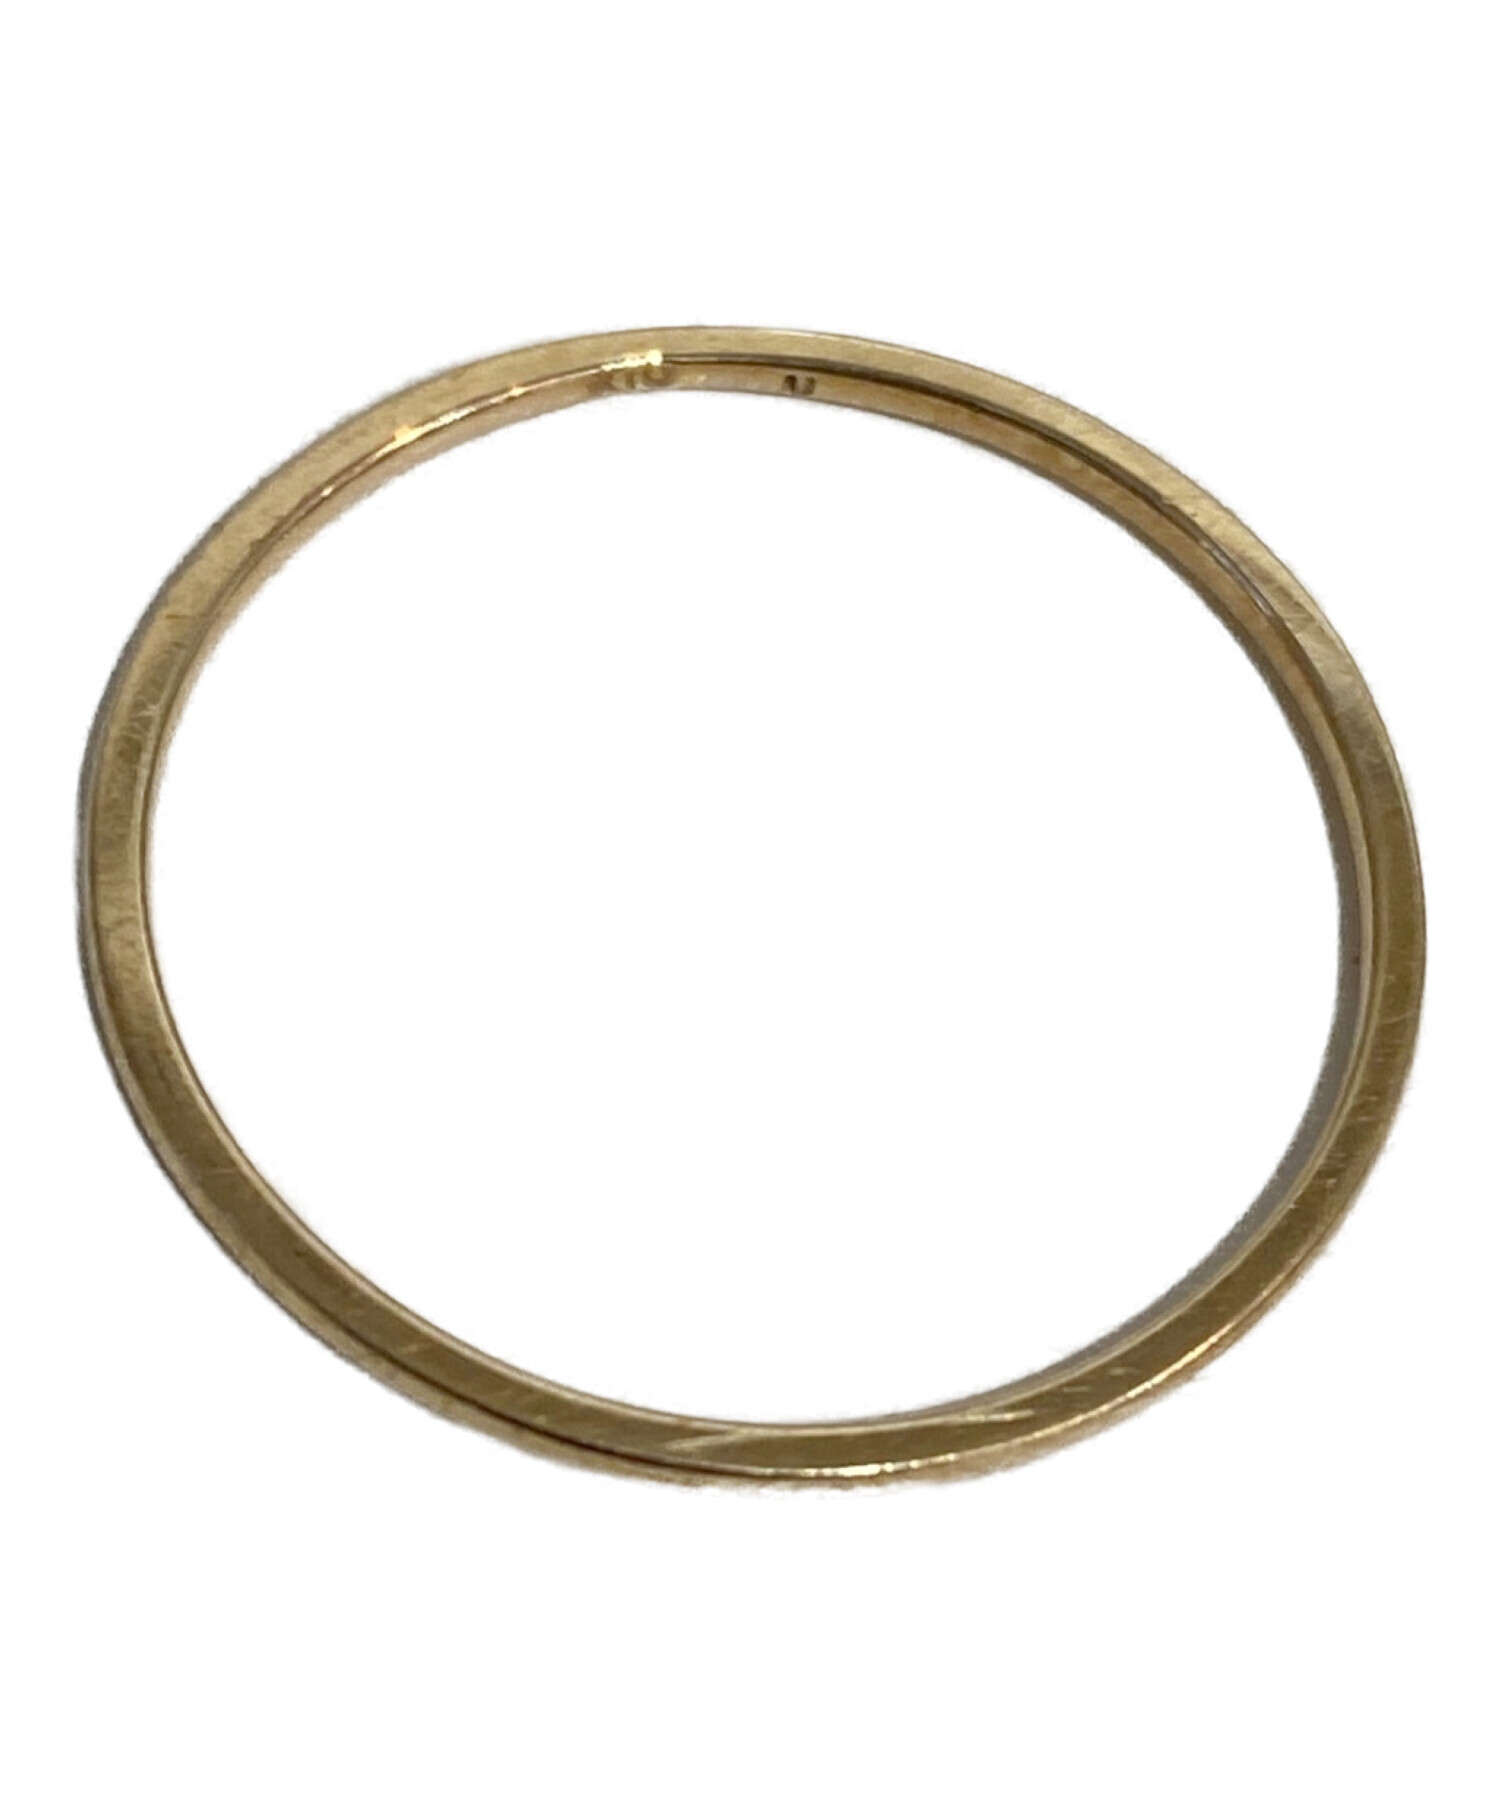 UNUSED (アンユーズド) GOLD K10 ring サイズ:20